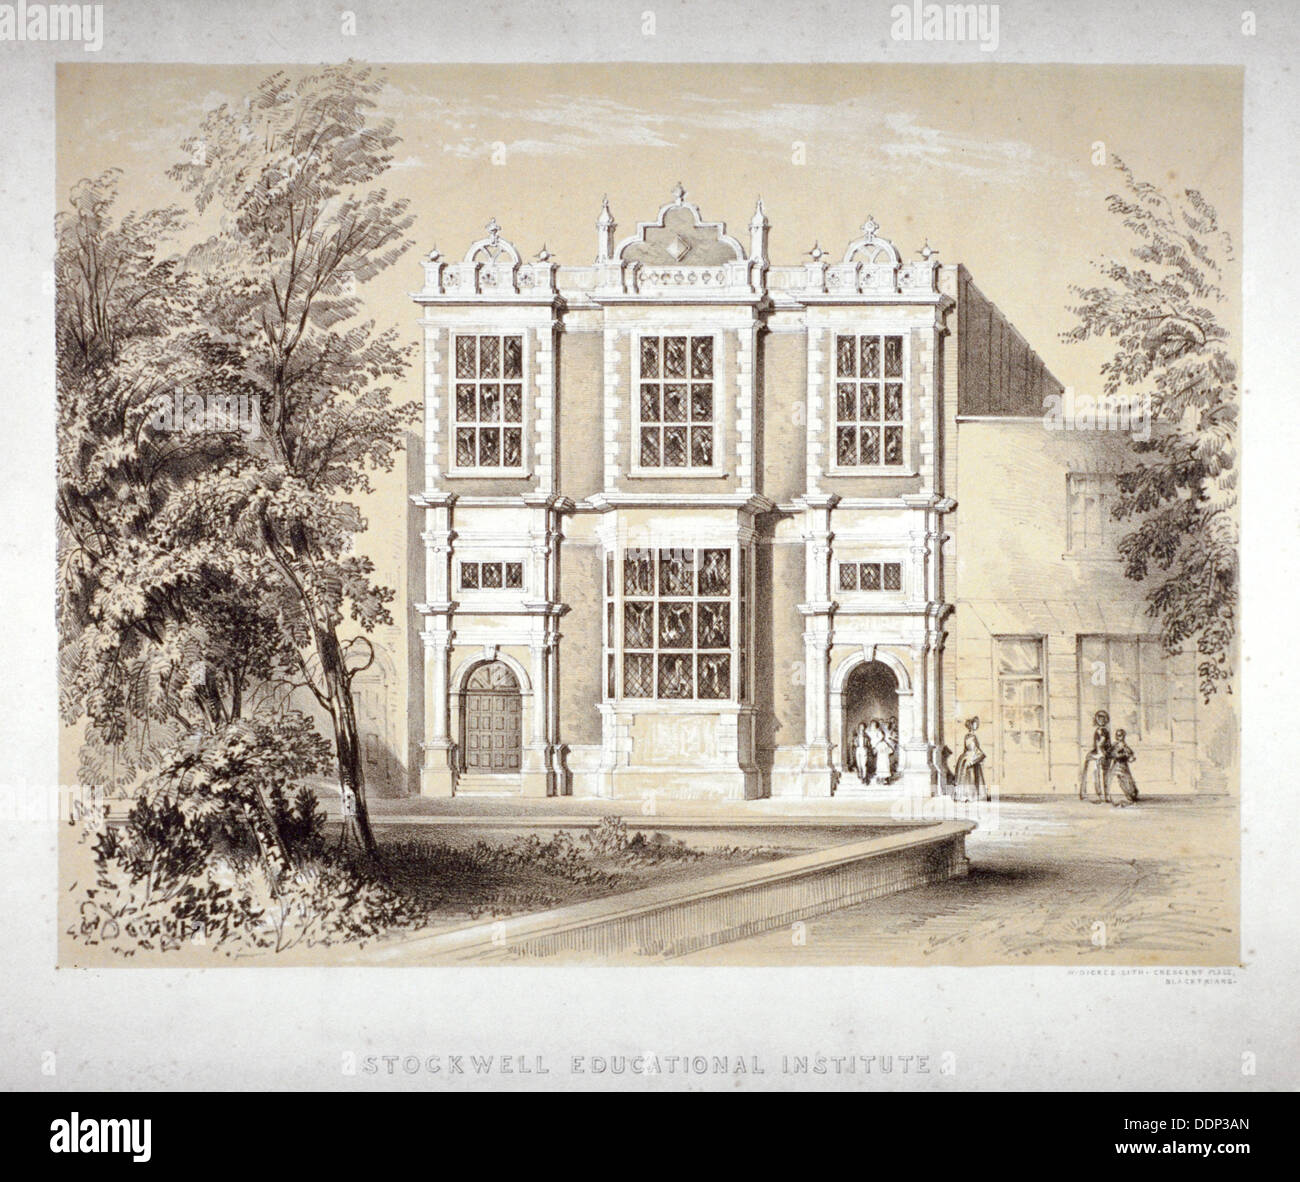 Stockwell Educational Institute, Stockwell, Lambeth, London, c1860. Artist: William Dickes Stock Photo